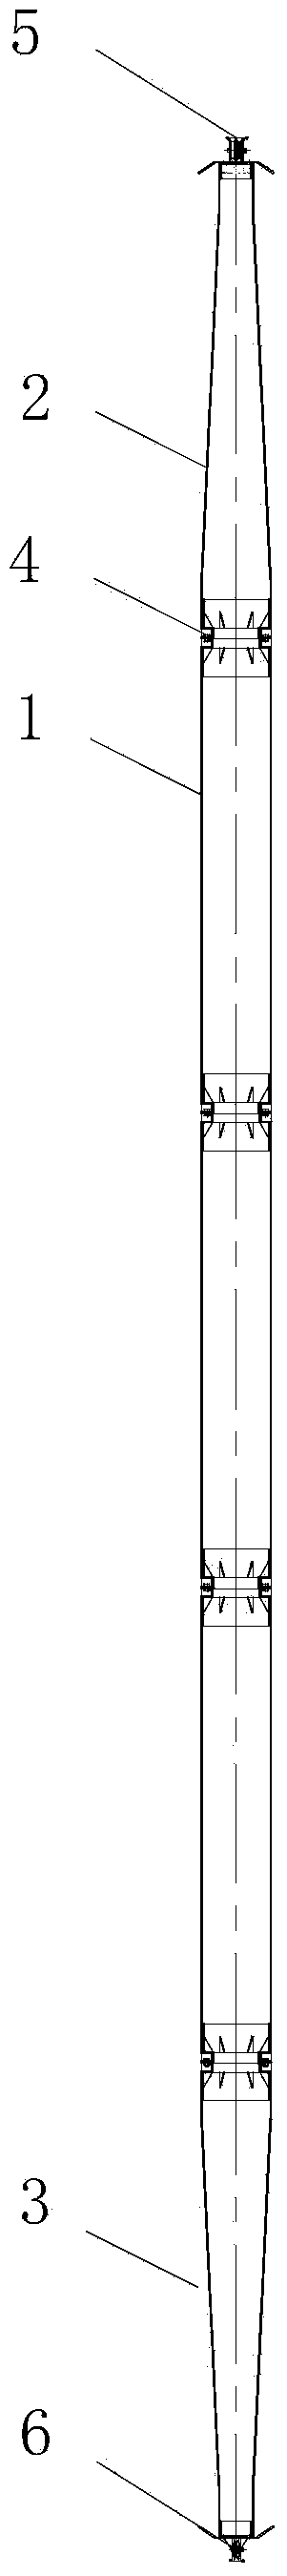 Single column type derrick of electric transmission line